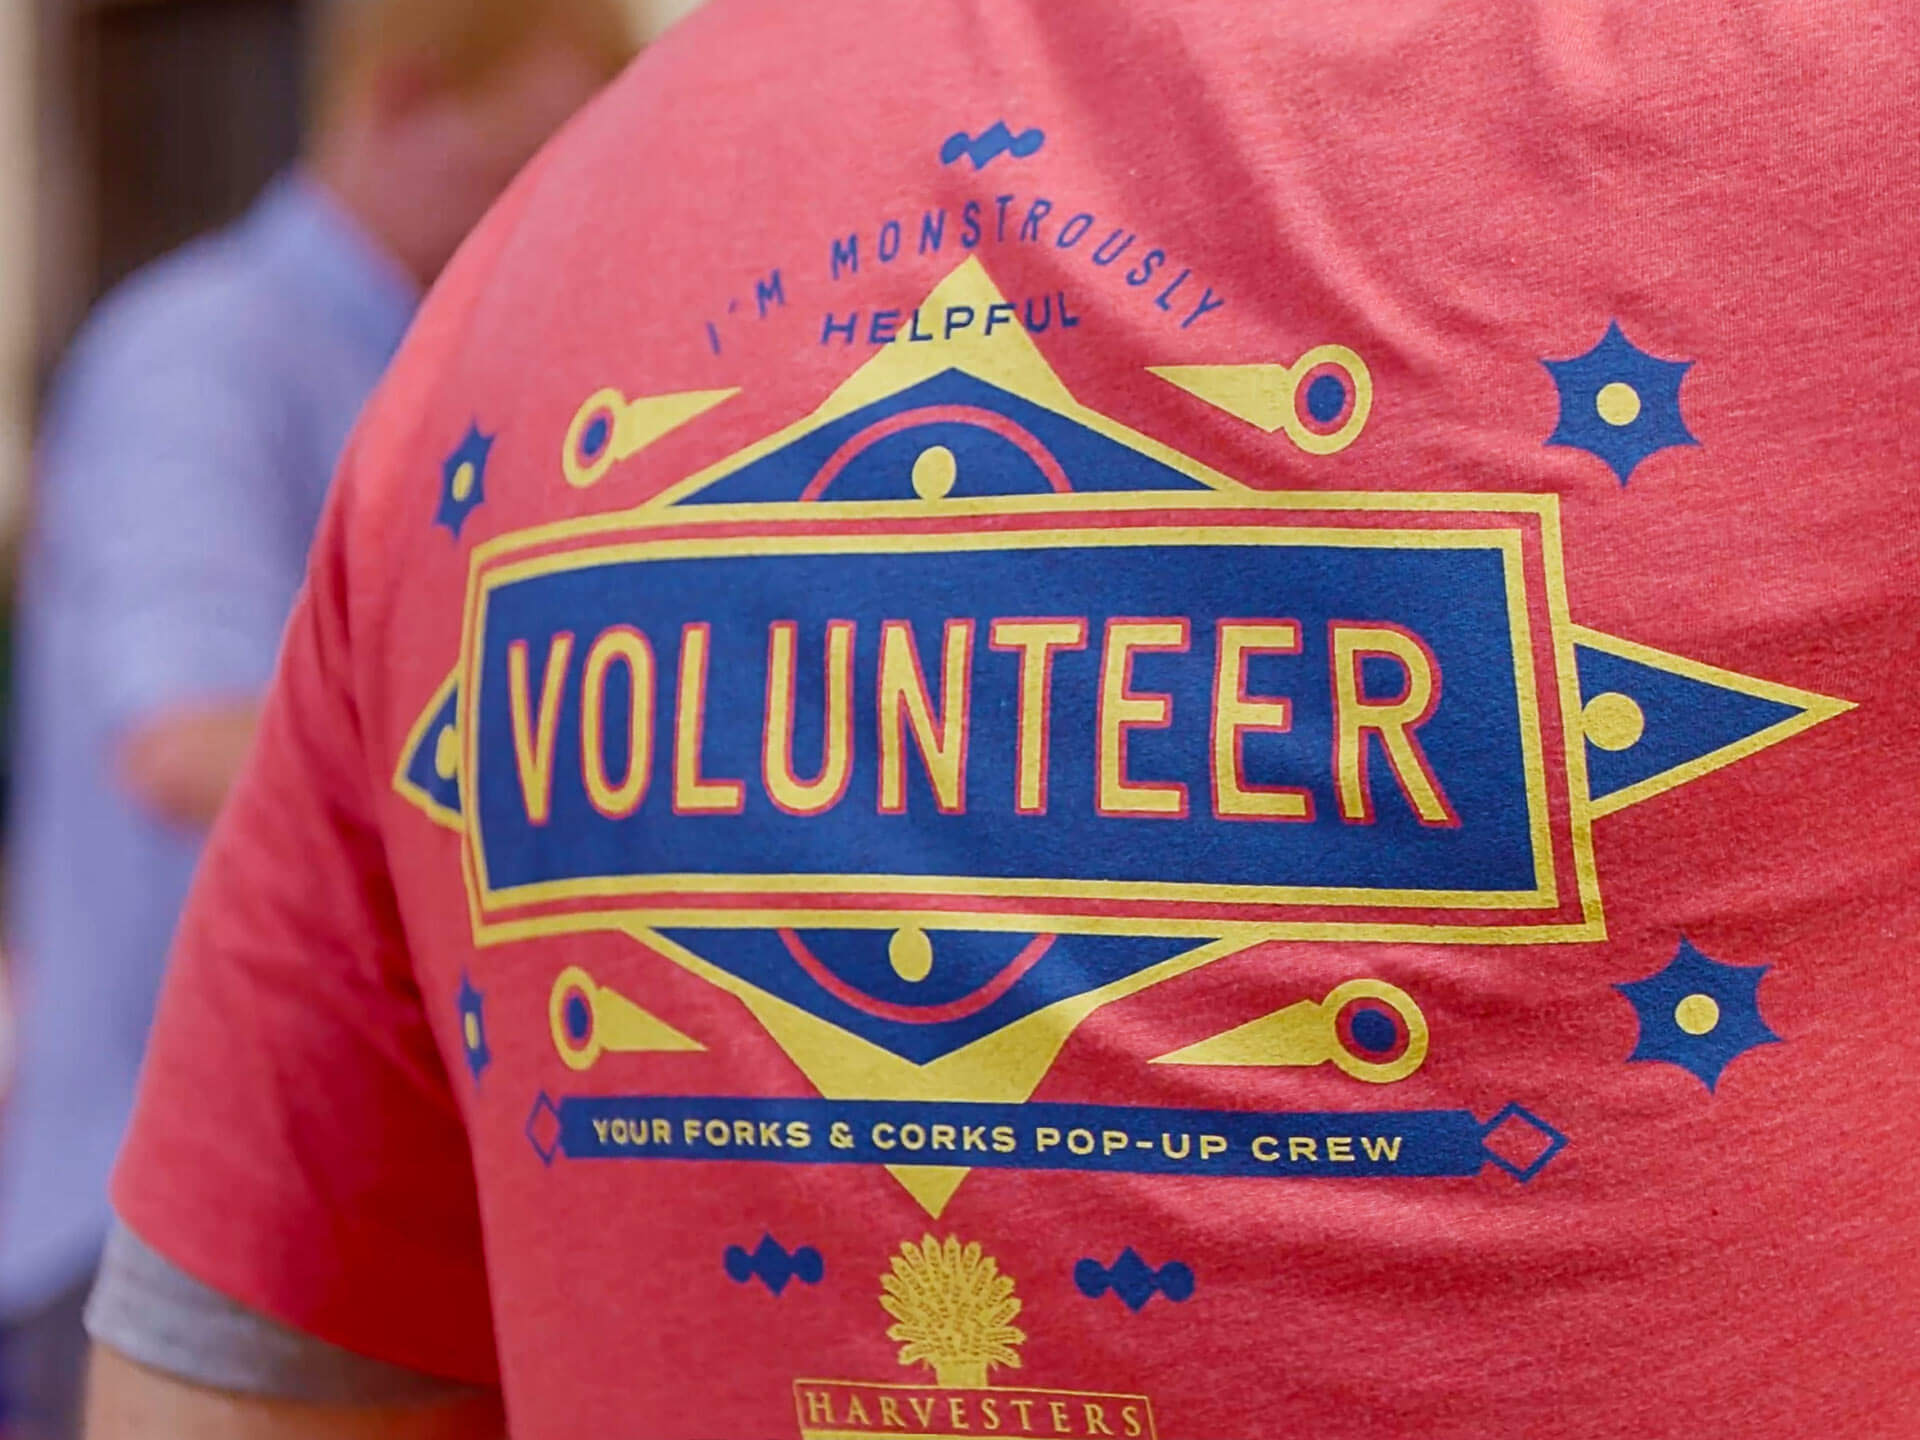 Closeup of ornate design saying "VOLUNTEER" printed on a volunteer's t-shirt